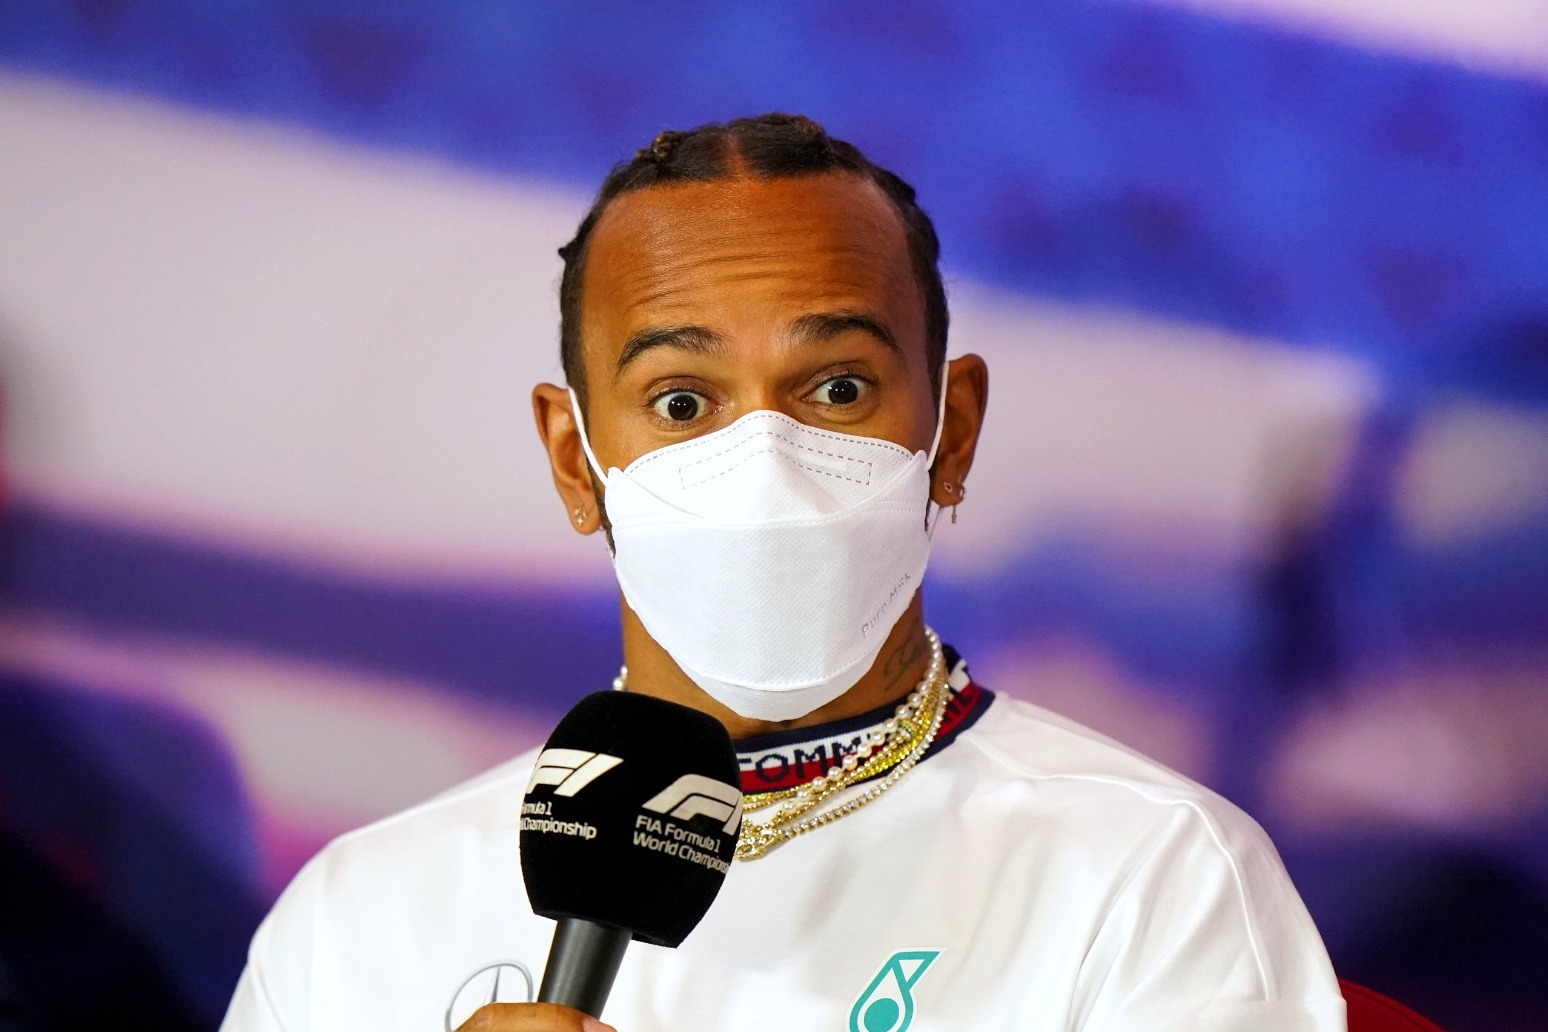 Lewis Hamilton queries role of ‘older voices’ in F1 after Nelson Piquet comment 